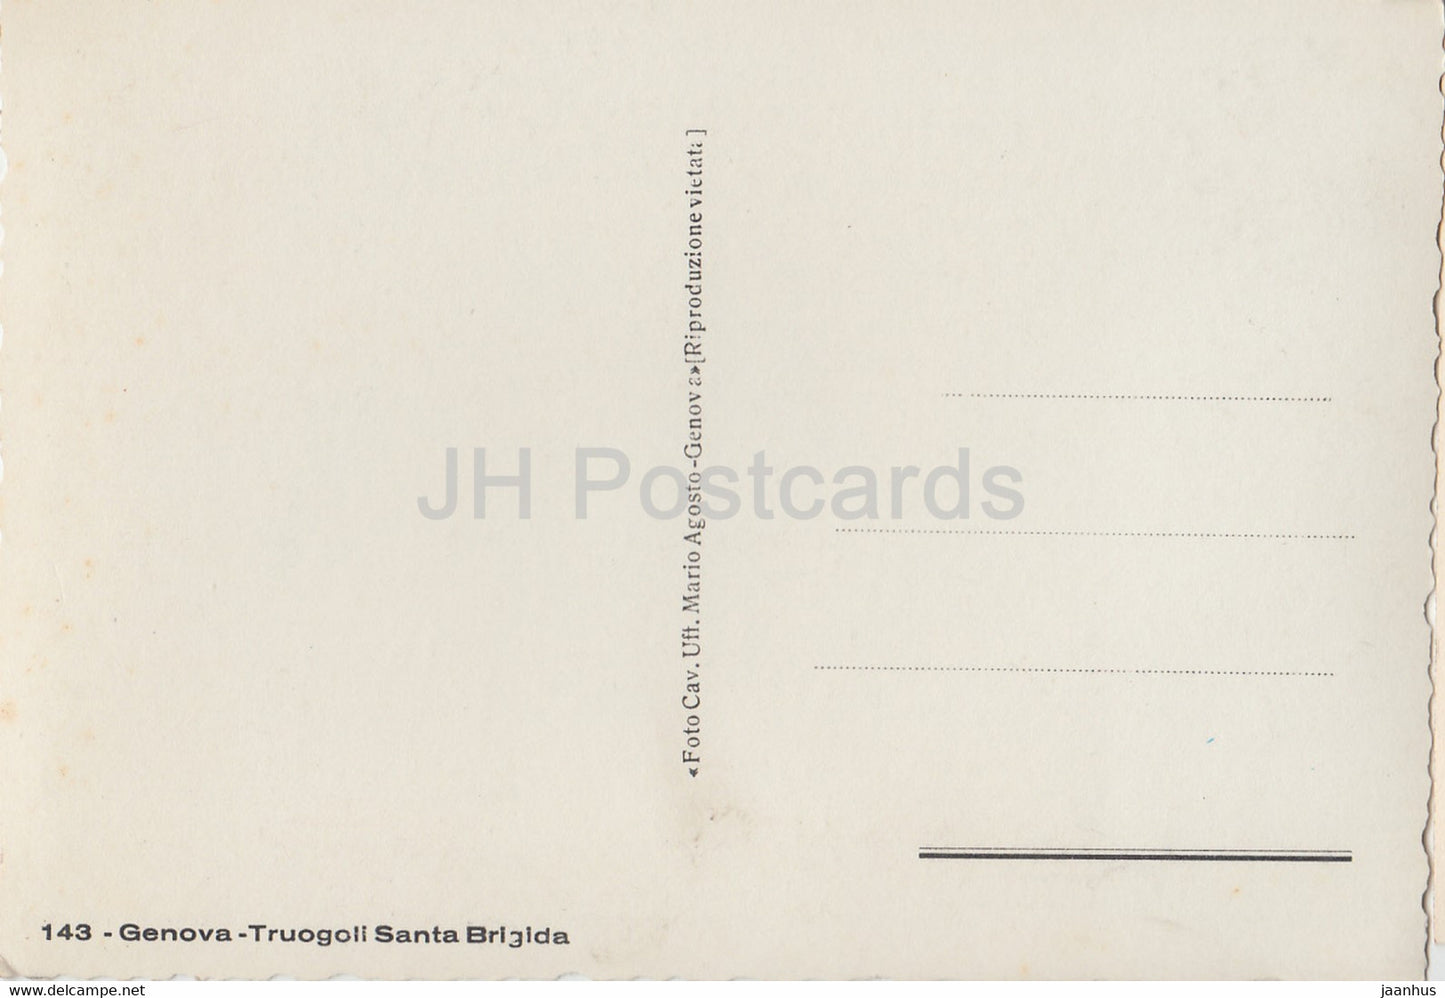 Genova - Gênes - Truogoli Santa Brigida - 143 - carte postale ancienne - Italie - inutilisée